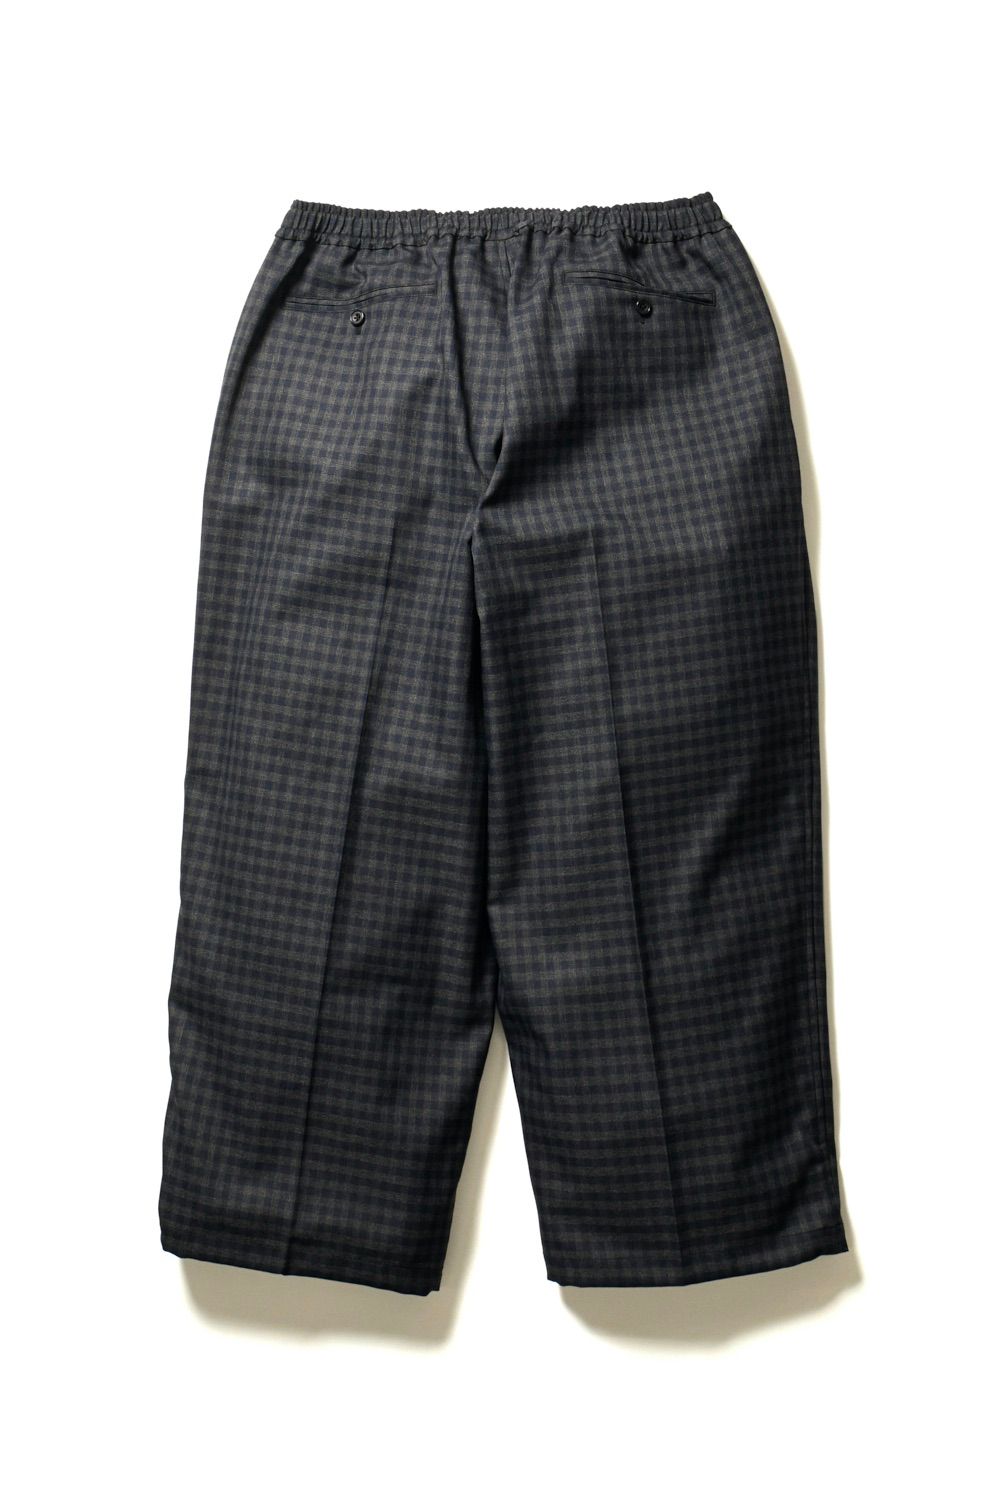 DAIWA PIER39 - tech wide easy 2p trousers plaids -navy gingham